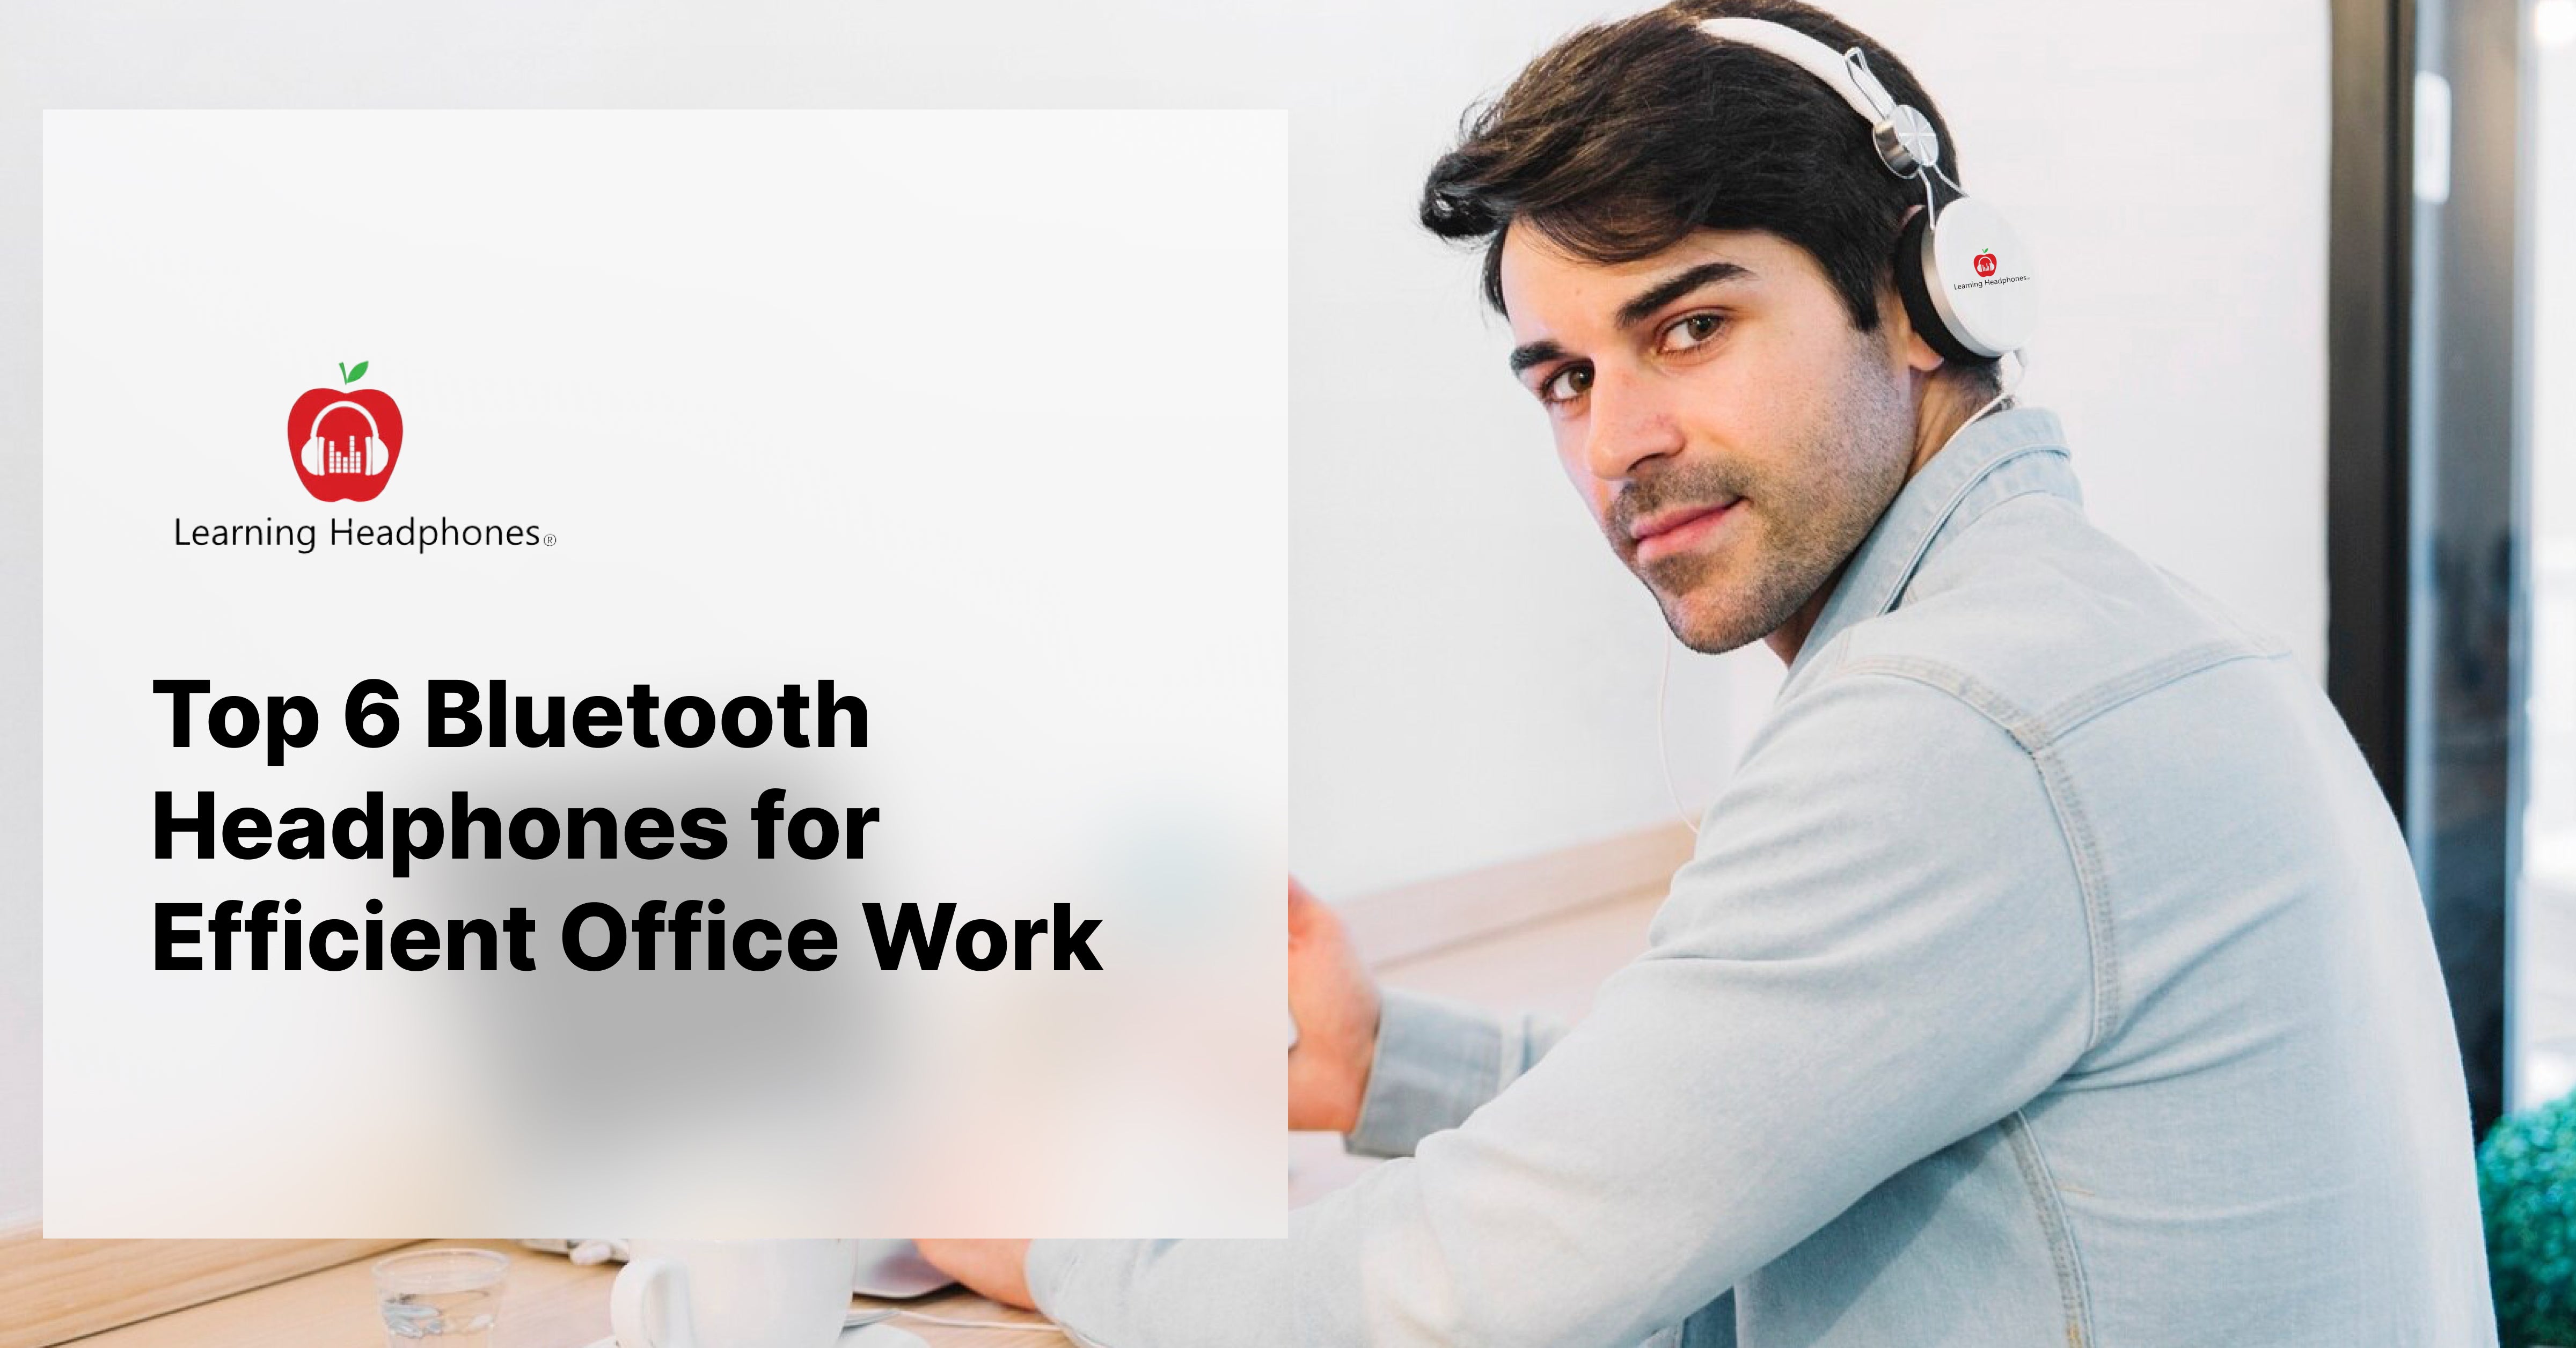 Top 6 Bluetooth Headphones for Efficient Office Work